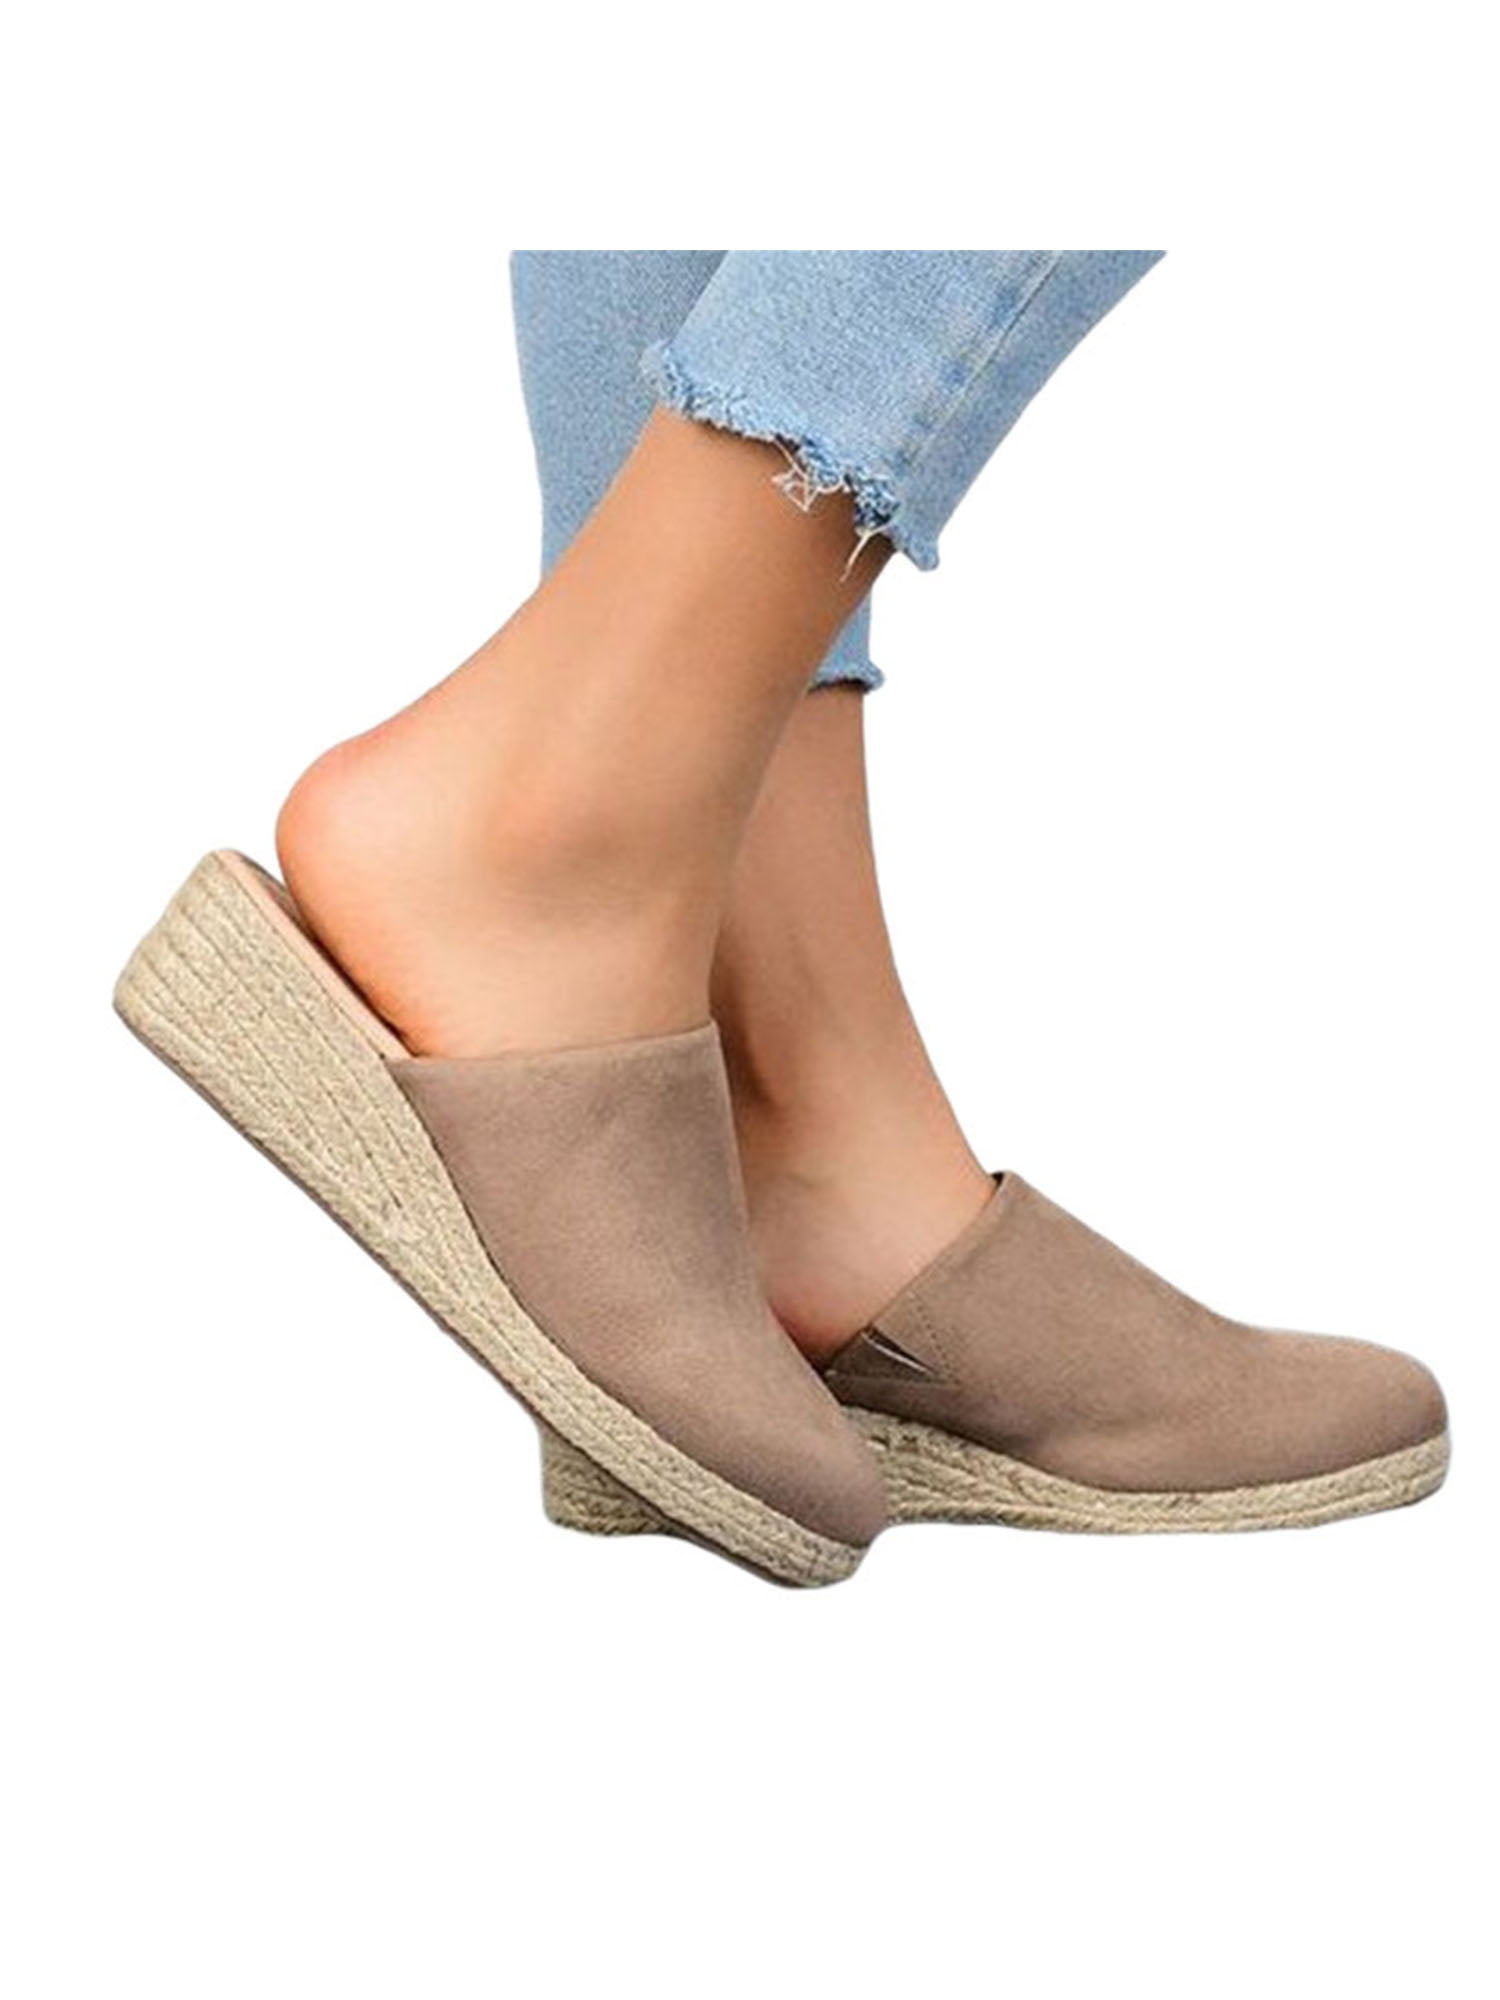 Ladies Womens Beauty Brown Slip On Flat Open Toe Wedge Holiday Gift Sandals Mule